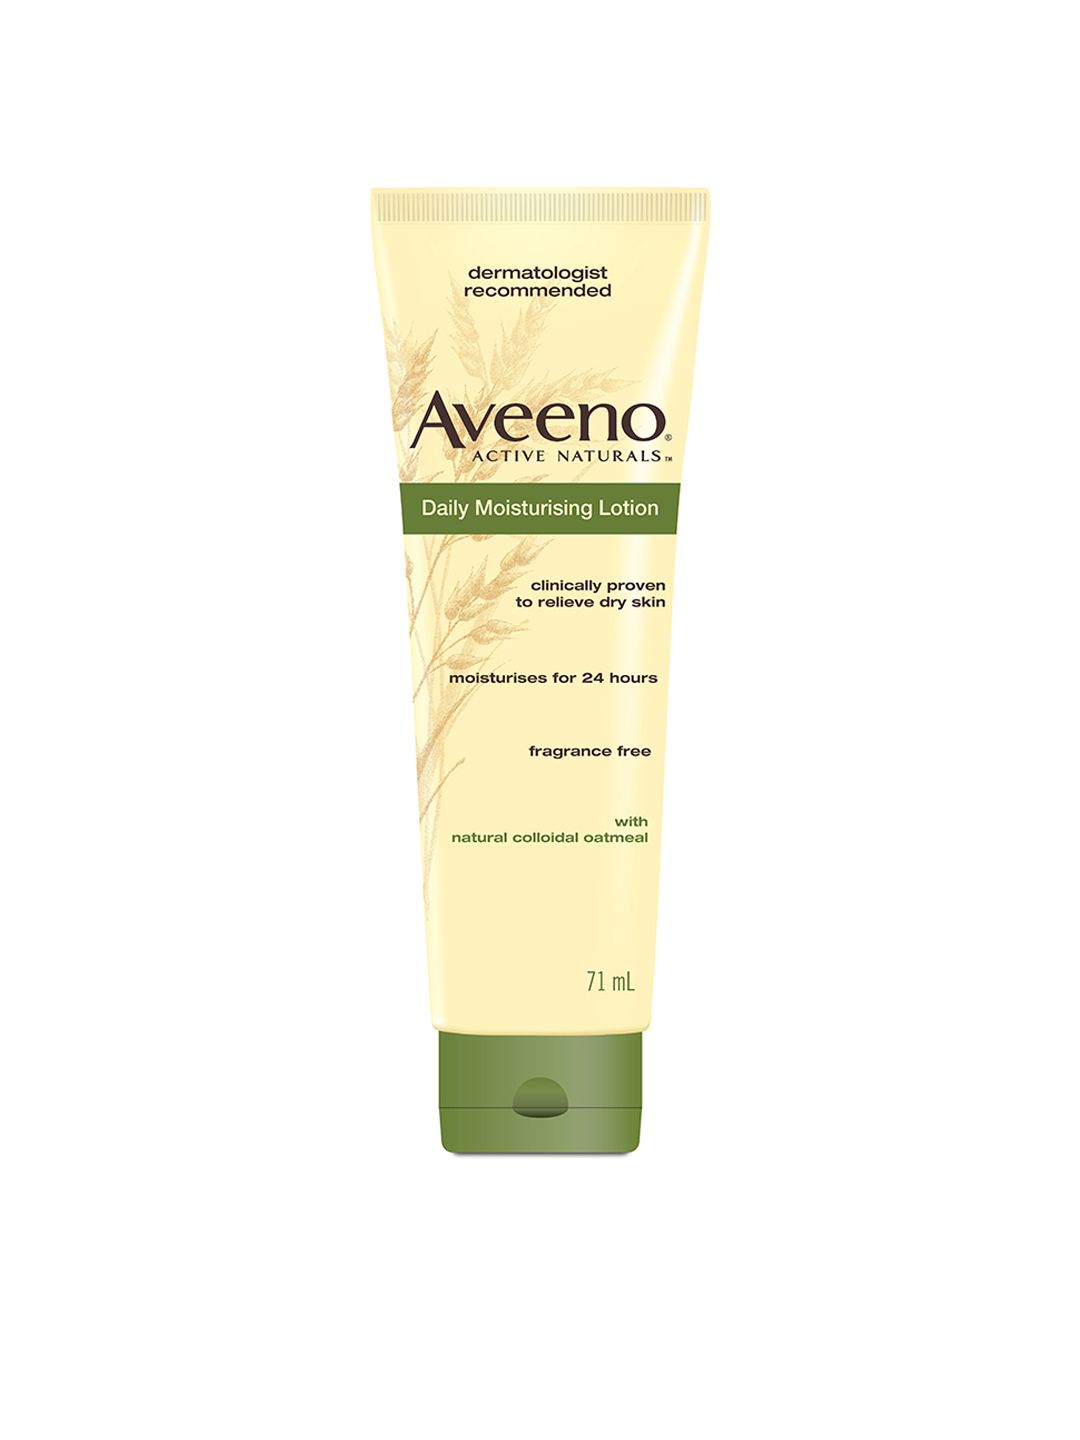 Aveeno Daily Moisturizing Lotion For Dry Skin - 71 ml